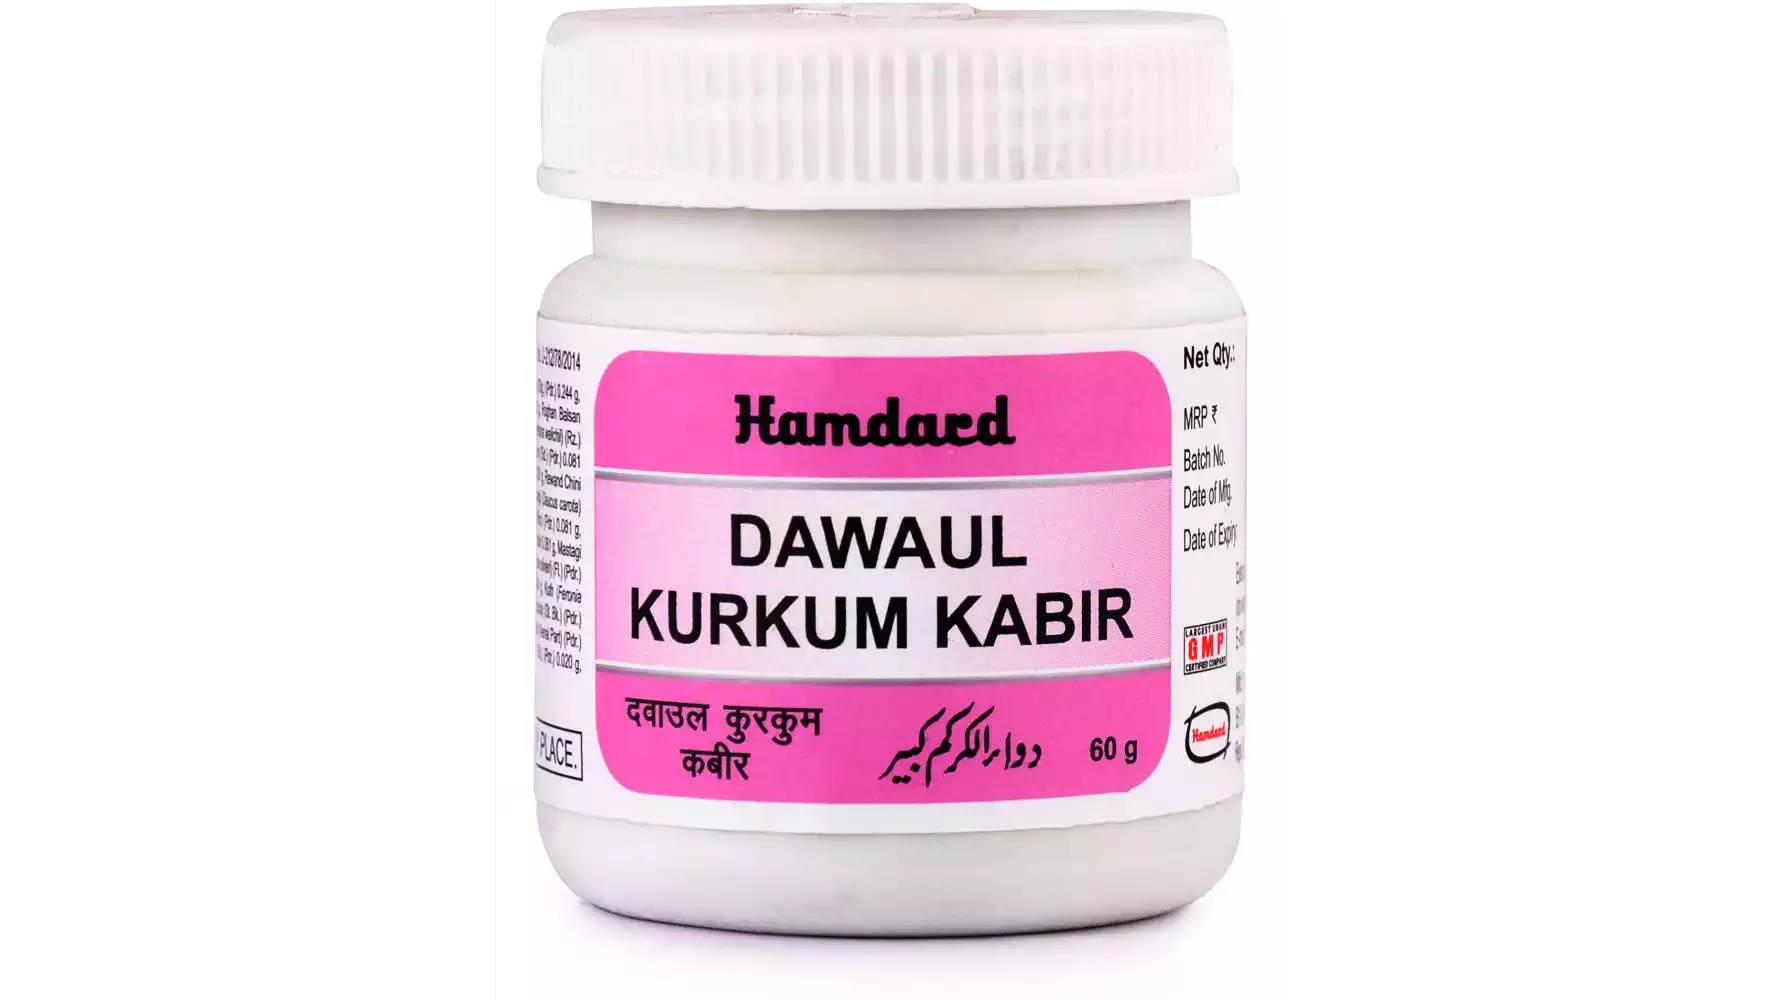 Hamdard Dawaul Kurkum Kabir (60g)